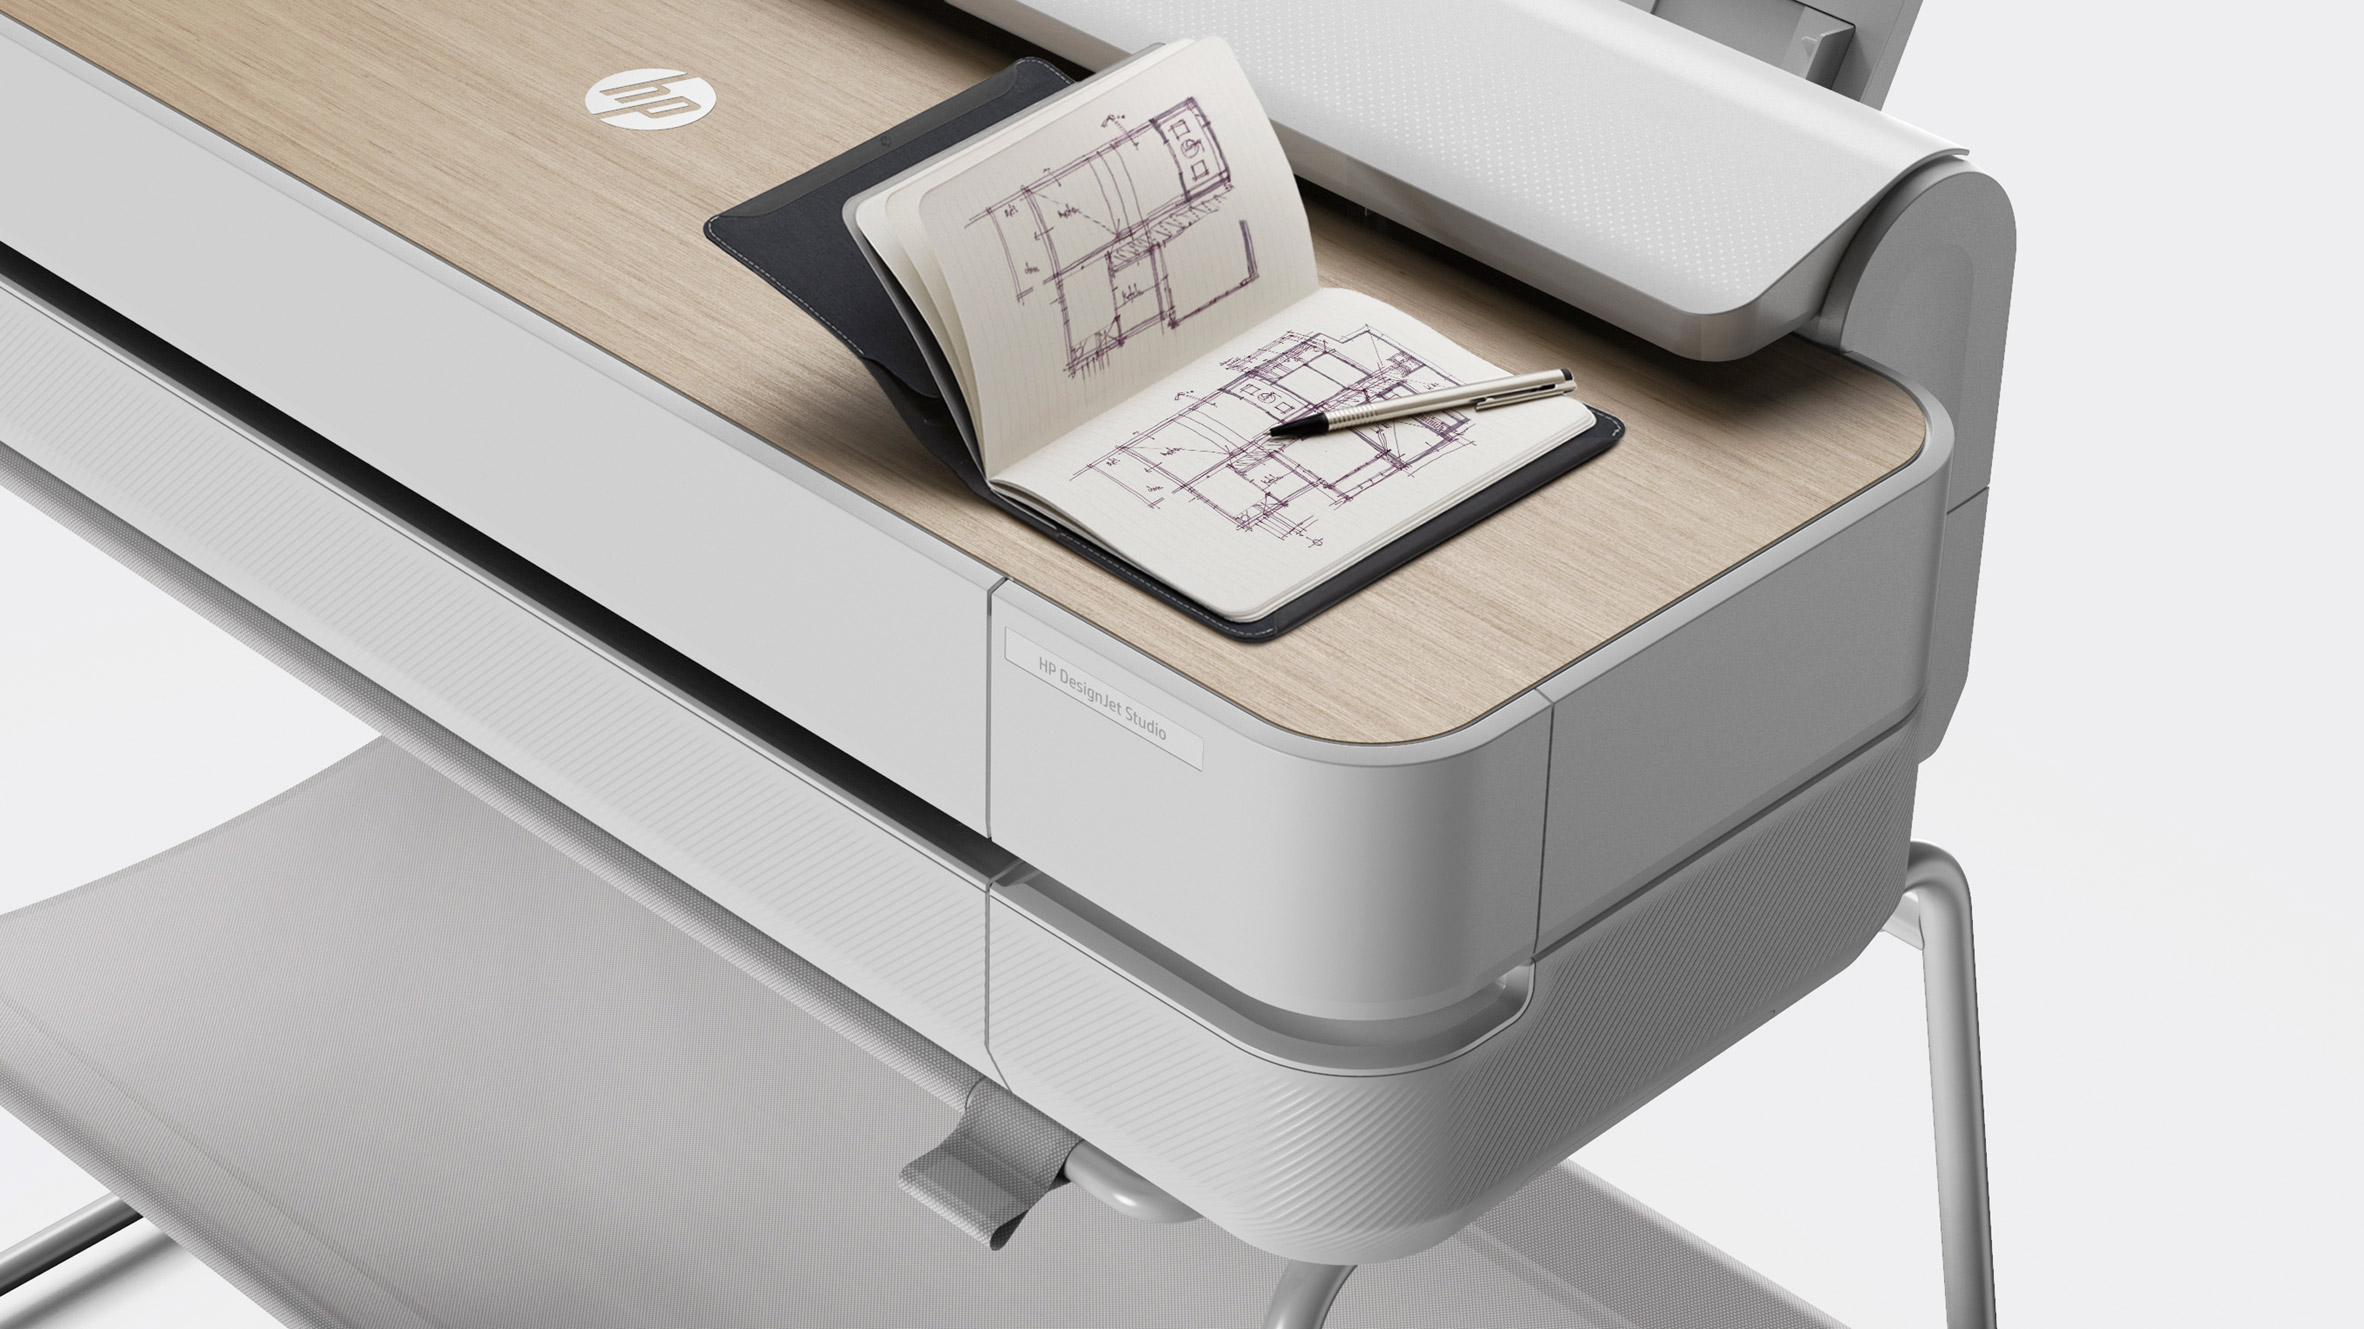 Render of HP's large-format printer